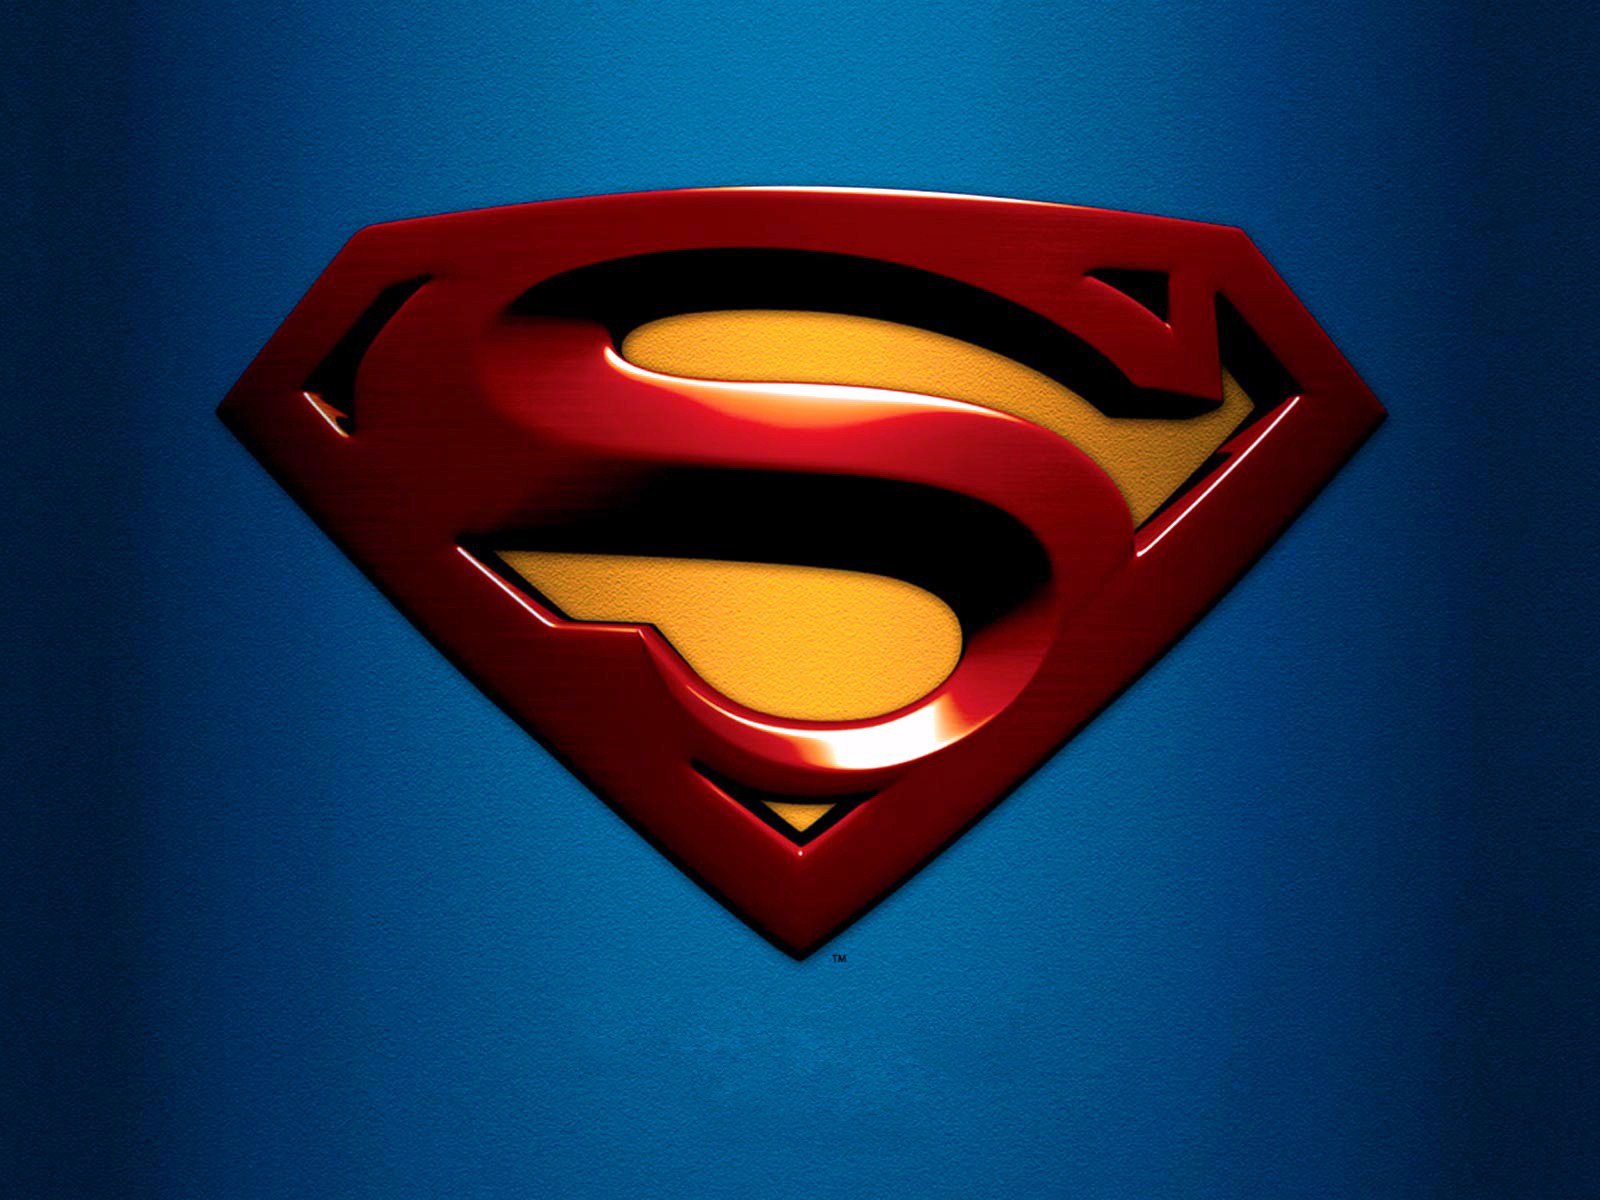 Superman logo wallpaper